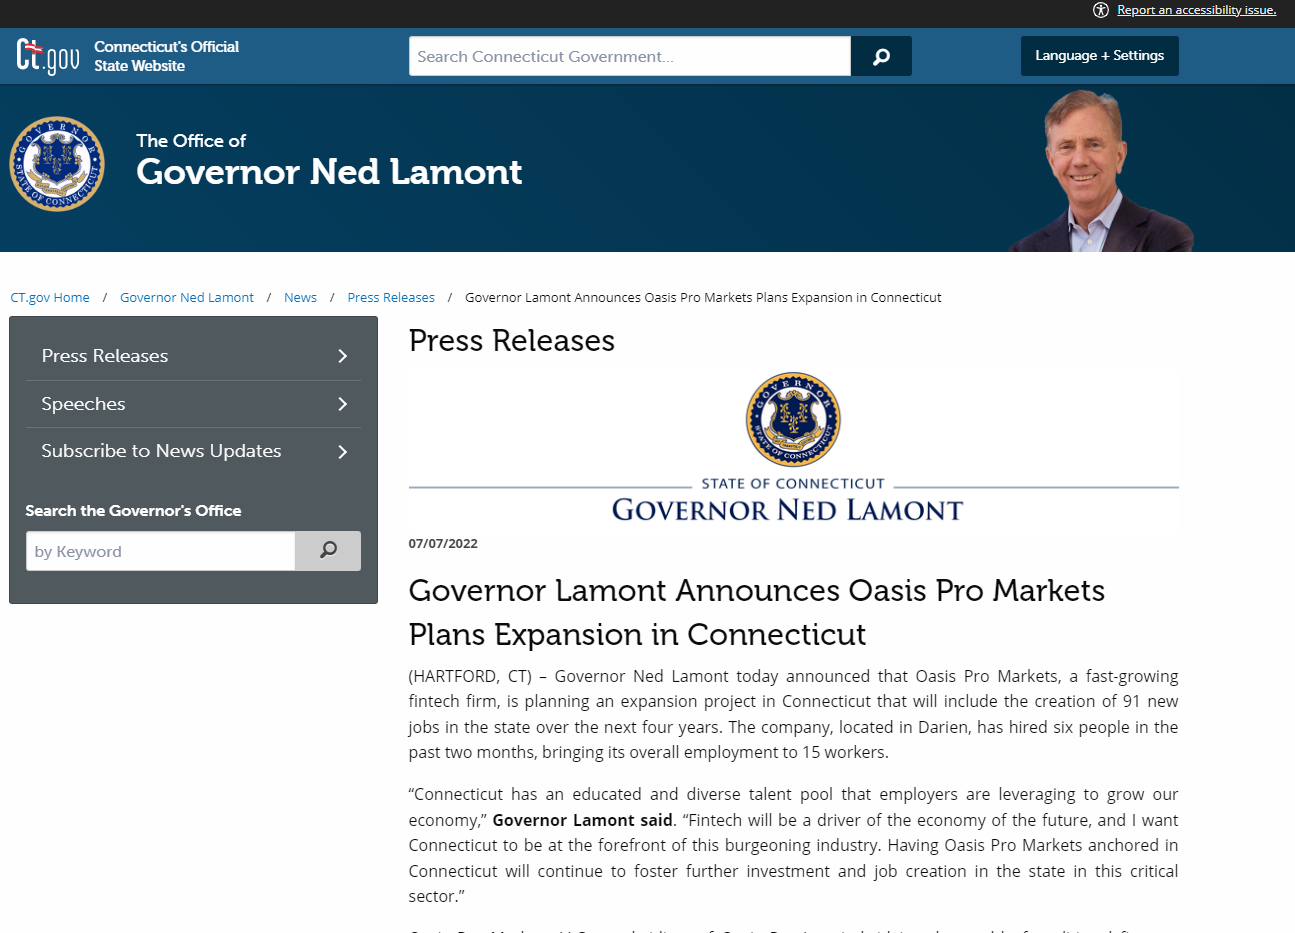 Governor Lamont Announces Oasis Pro Markets Plans Expansion in Connecticut